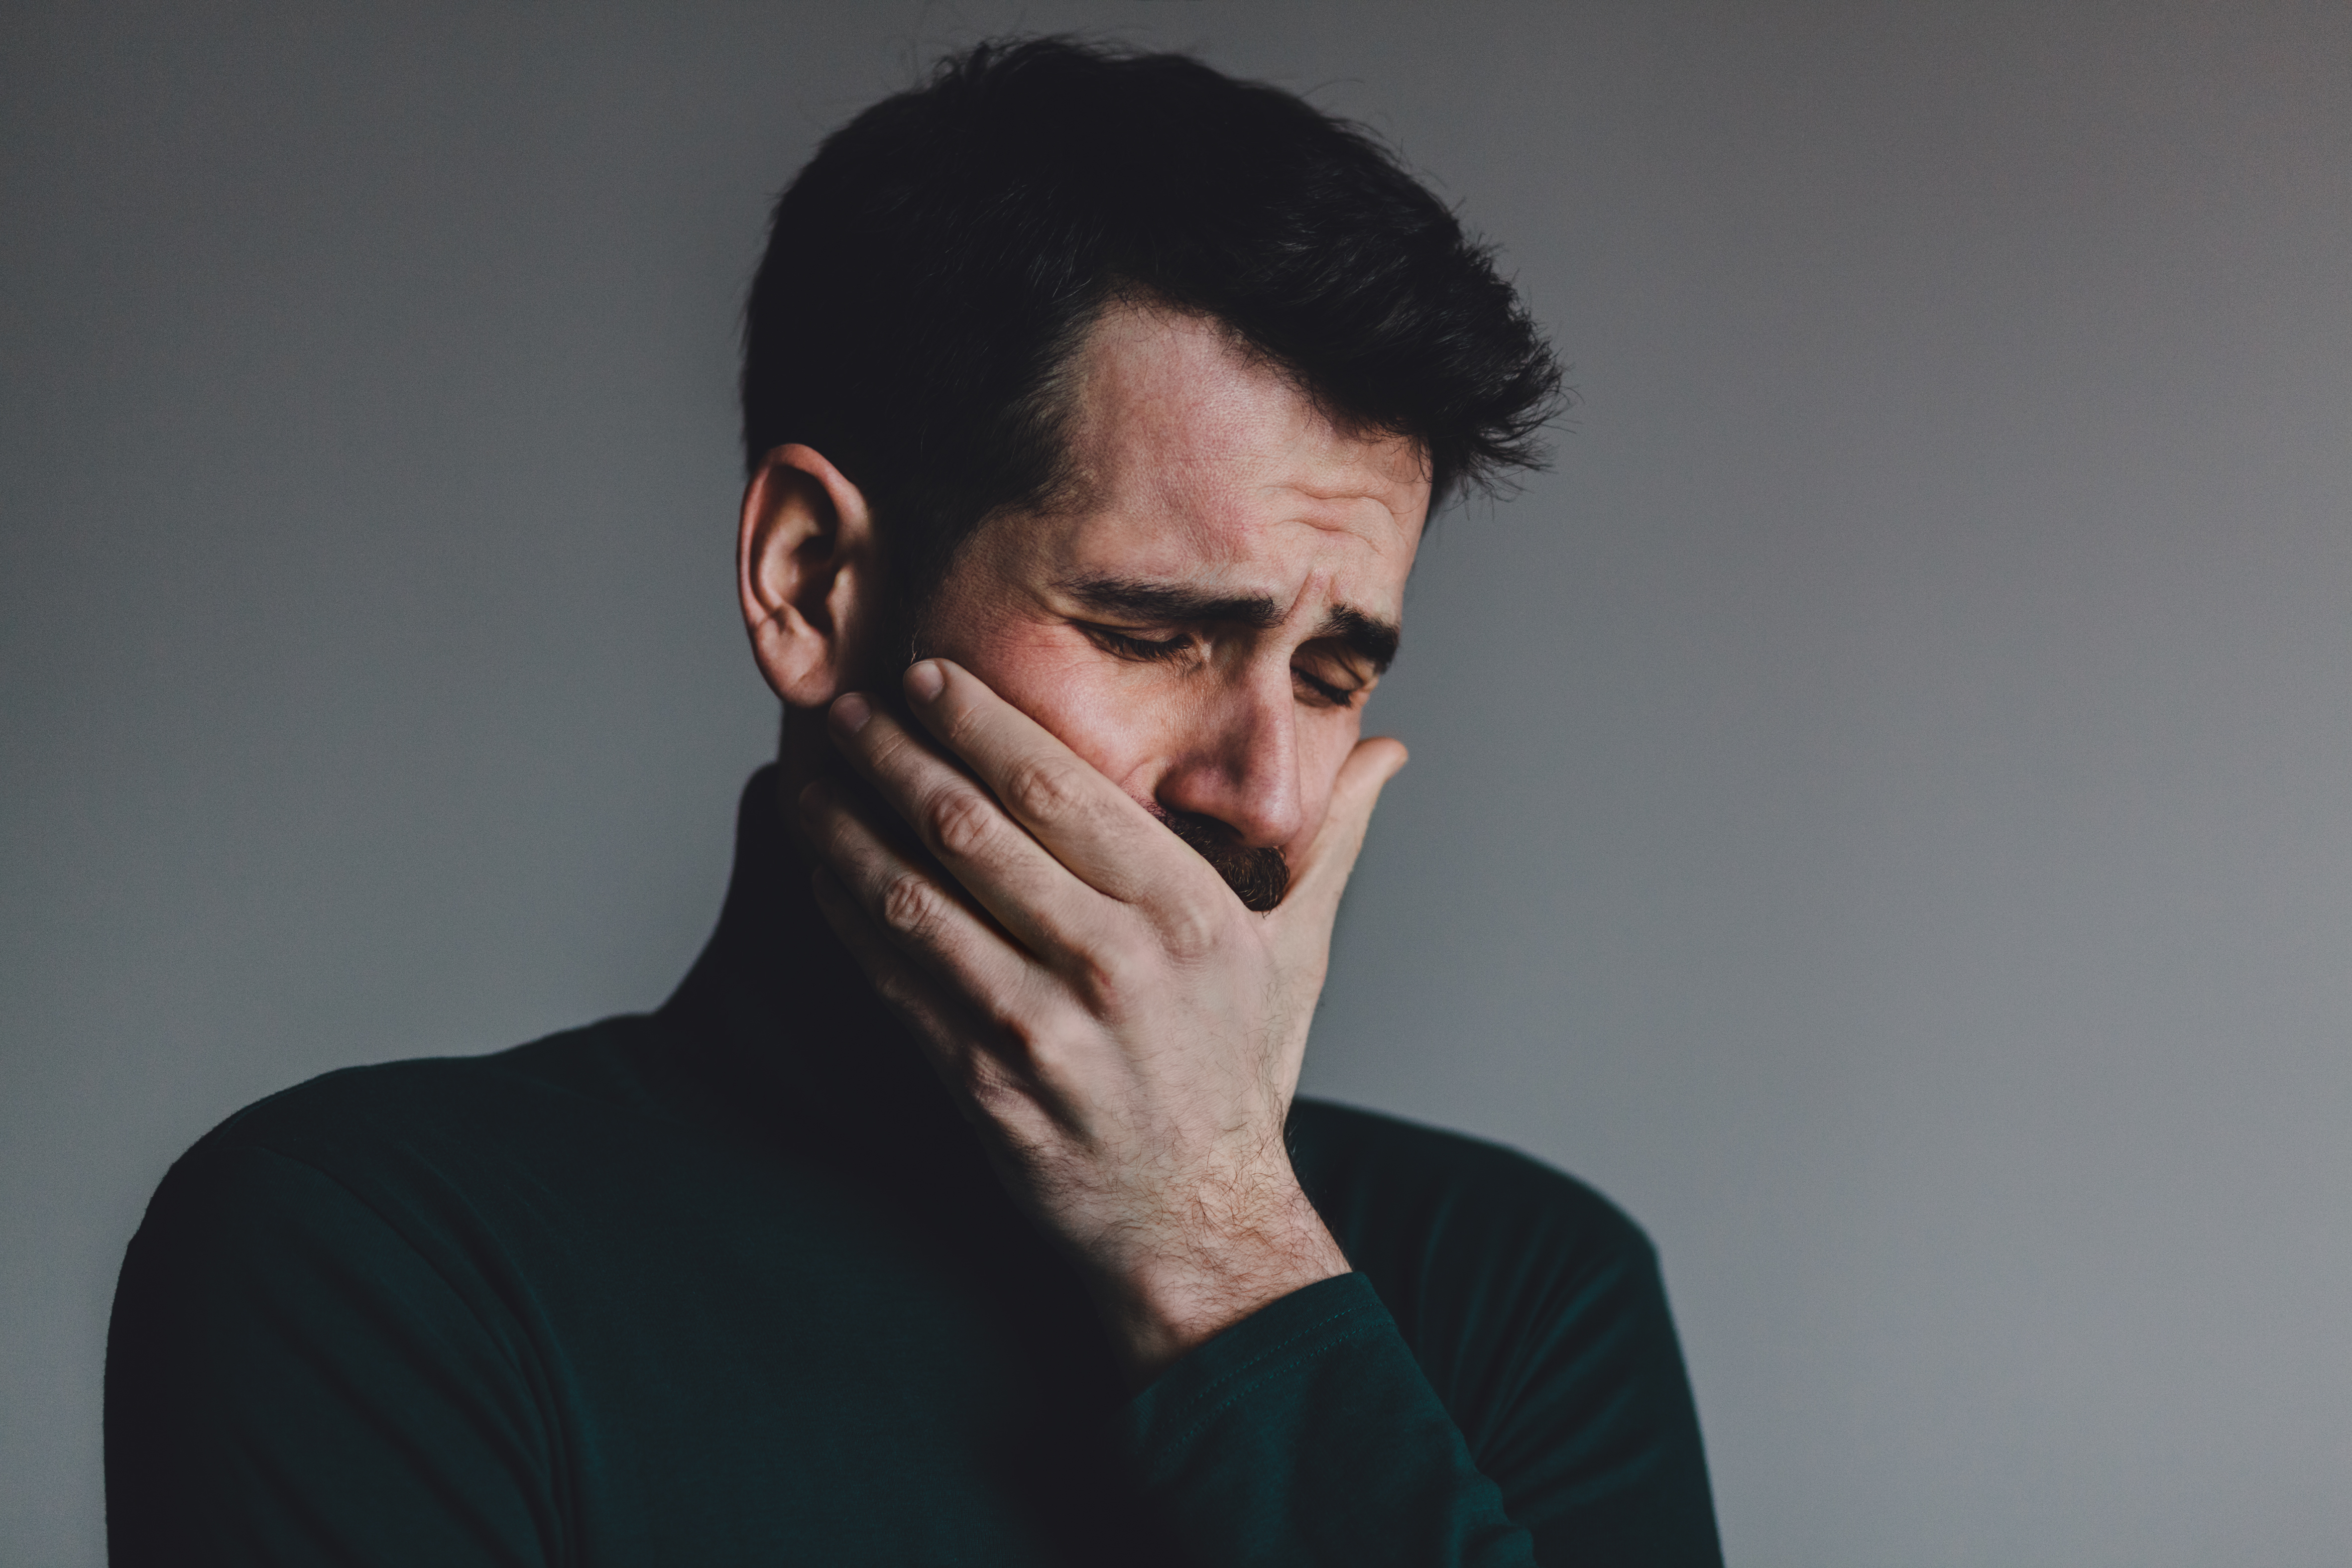 Un hombre se sujeta la boca mientras llora | Foto: Shutterstock